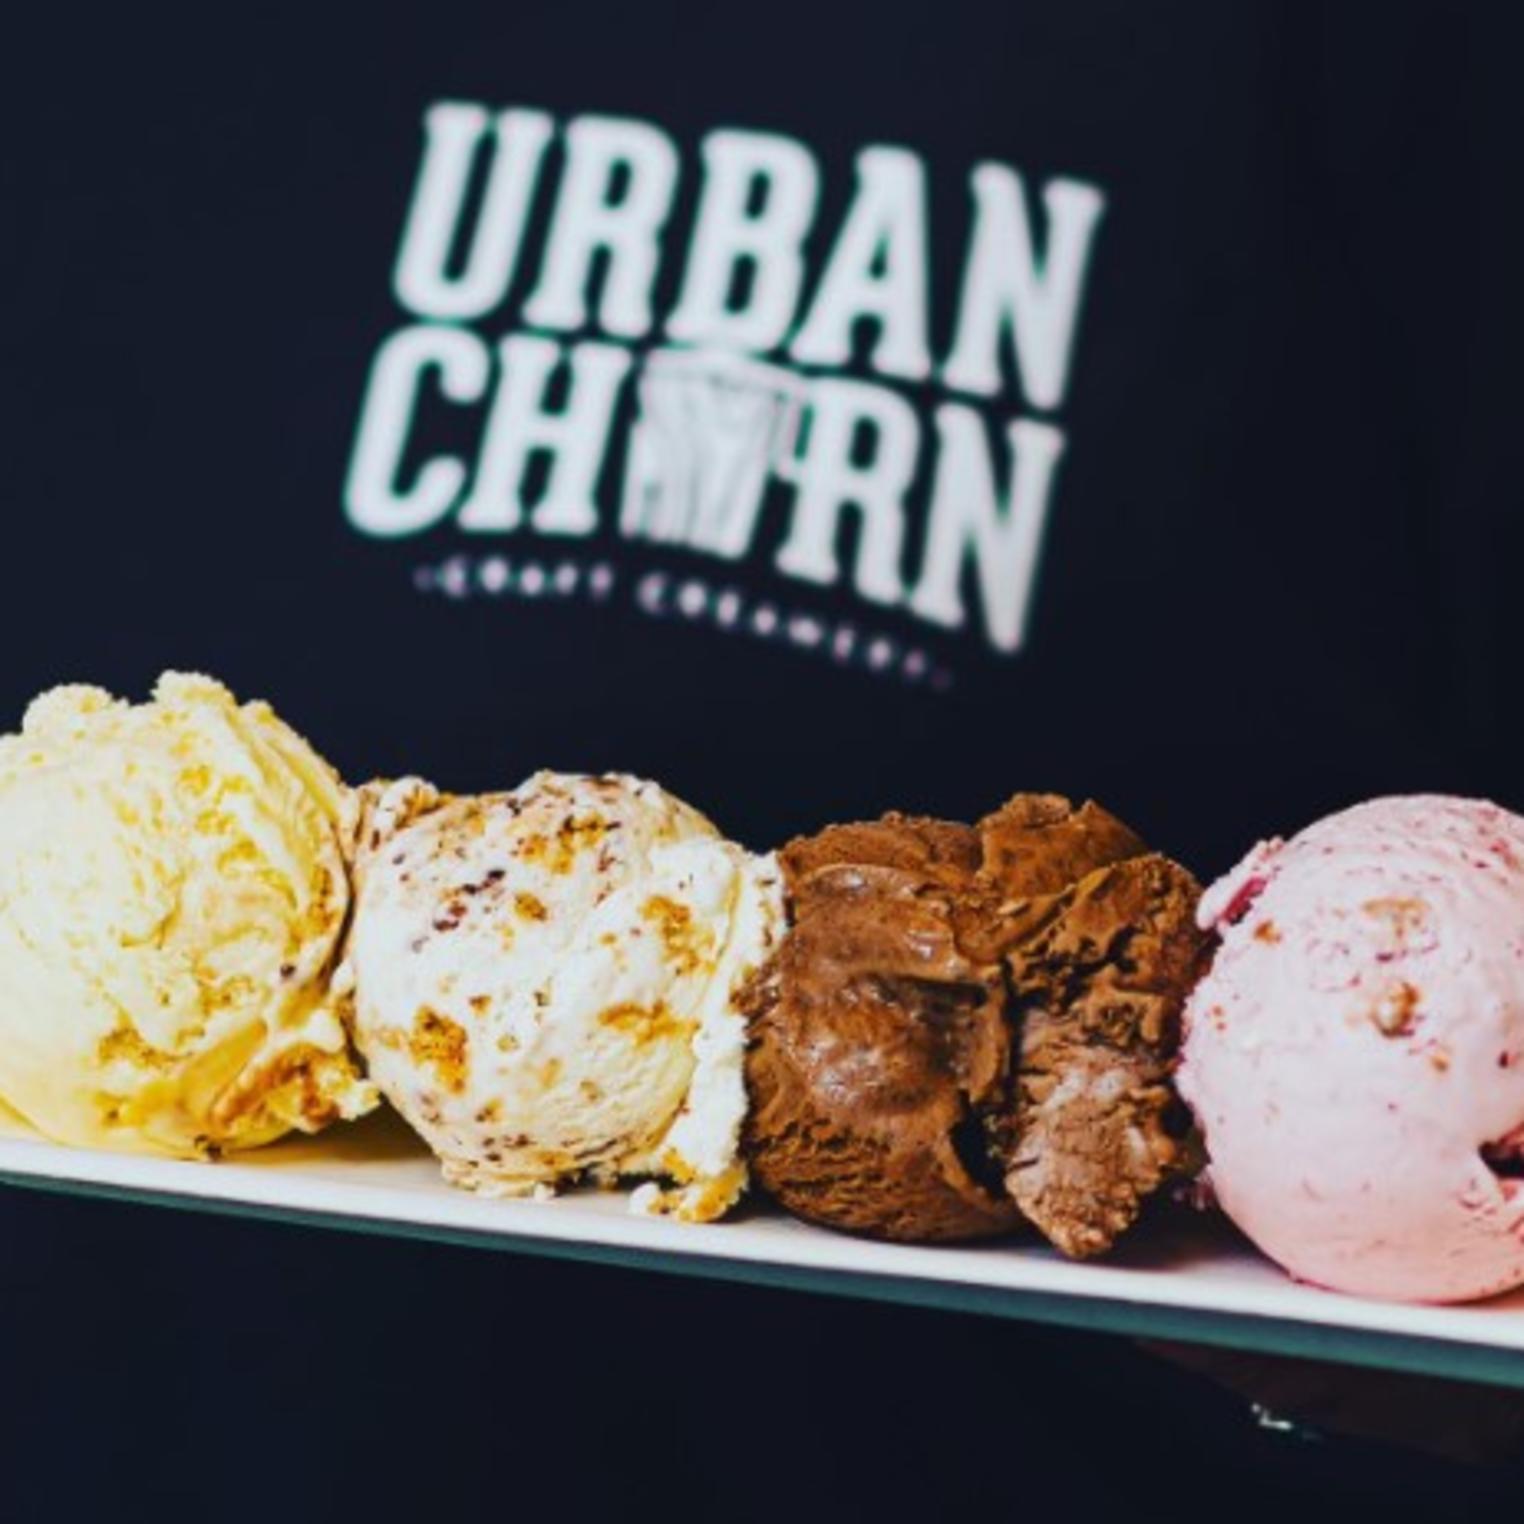 Urban Churn Craft Creamery Carlisle